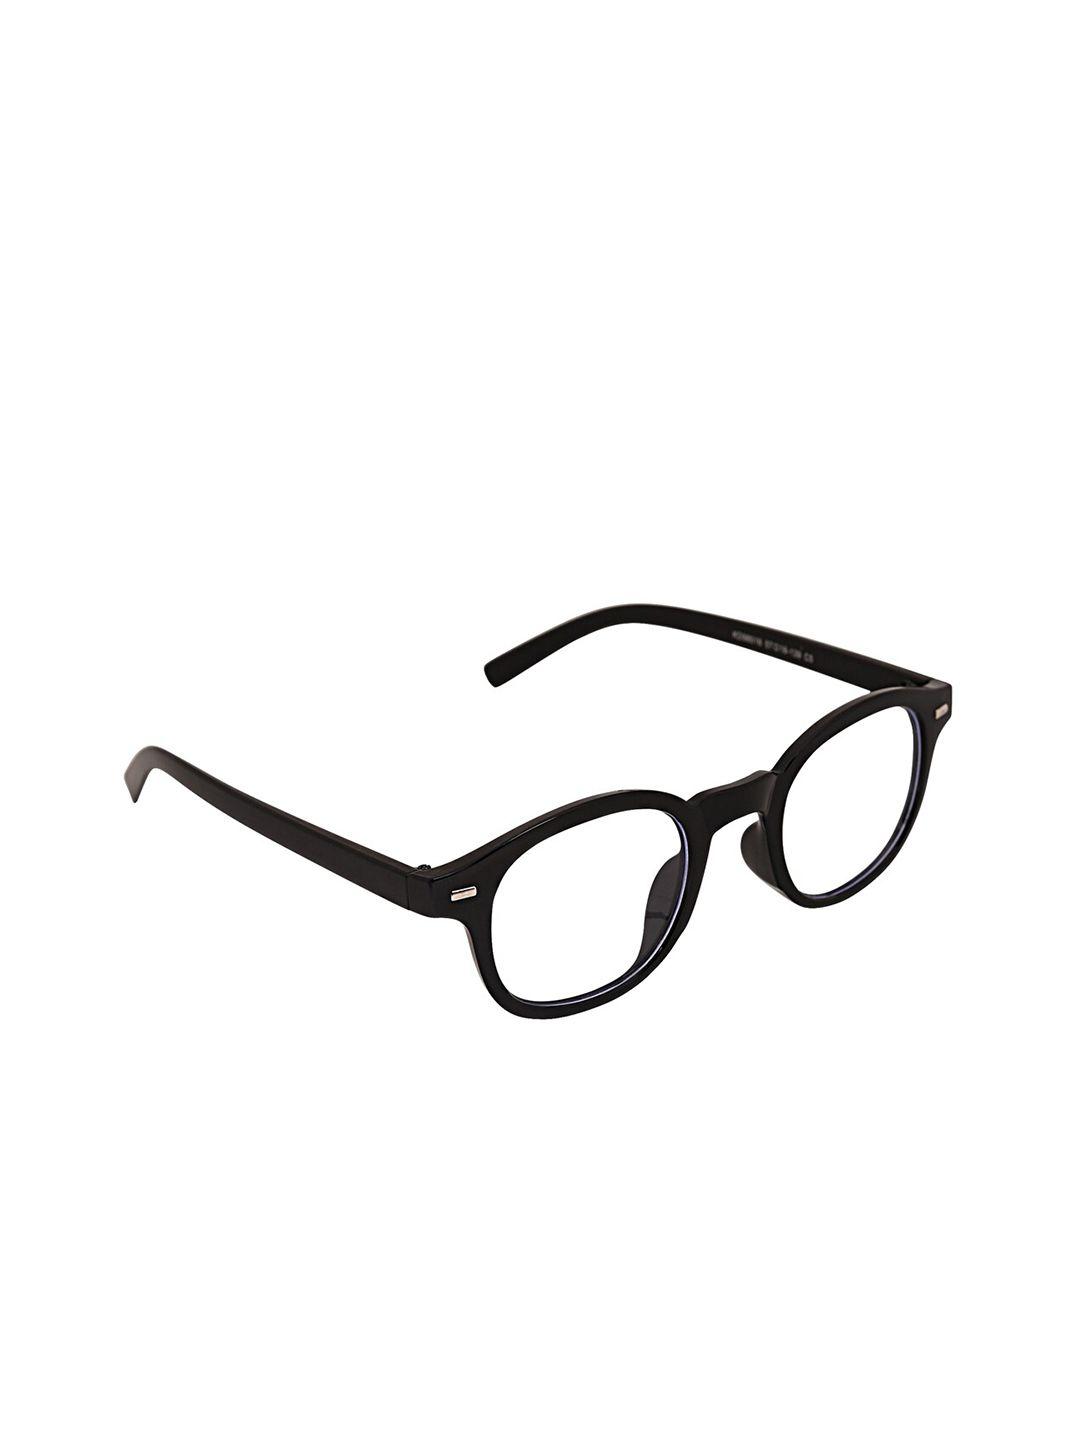 peter jones eyewear unisex black full rim round frames computer glasses